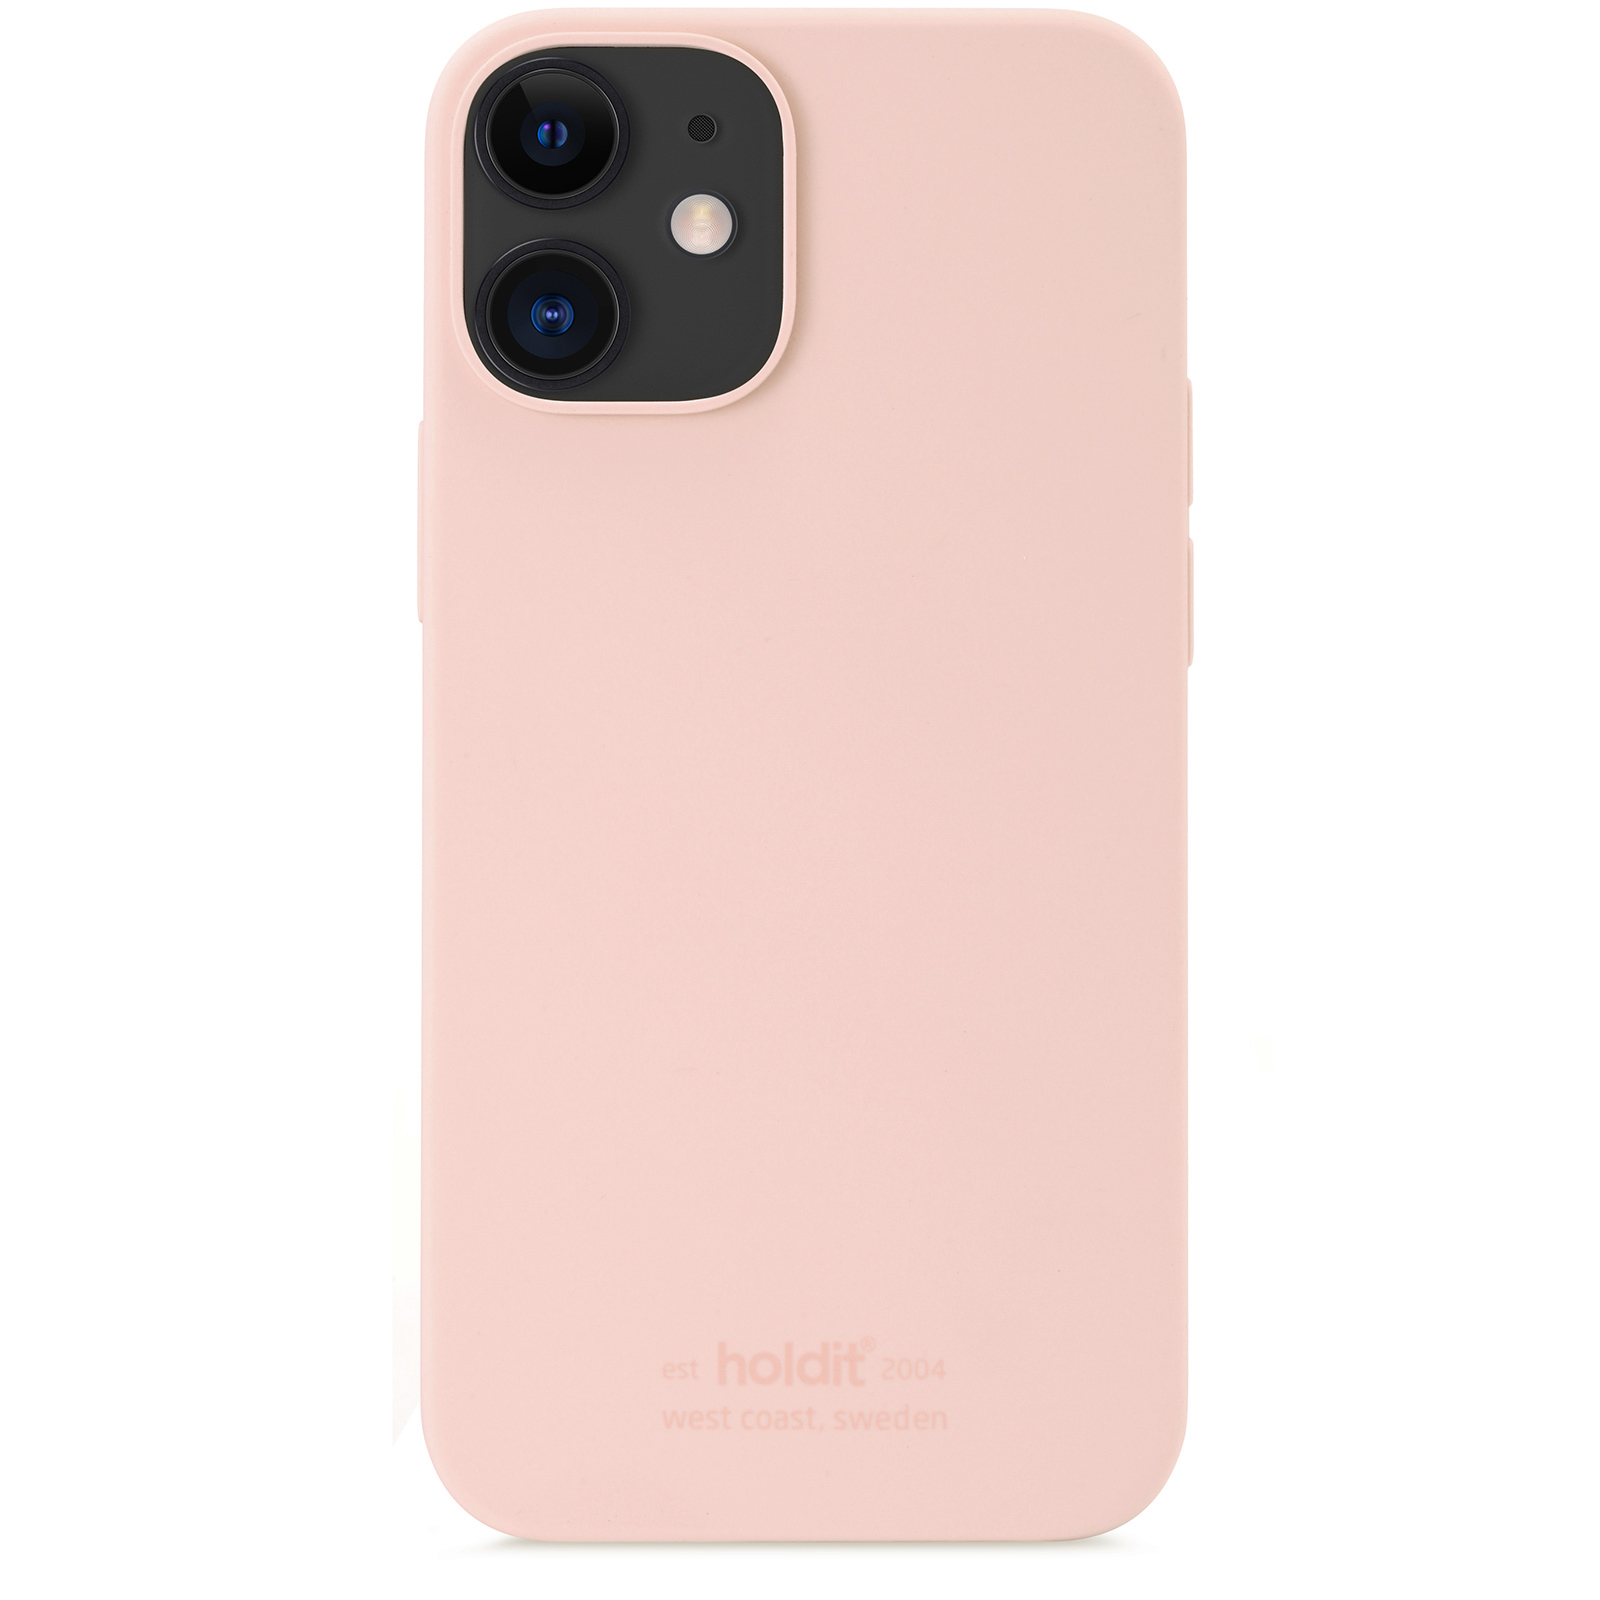 iPhone 12 Mini, case silicone, blush pink